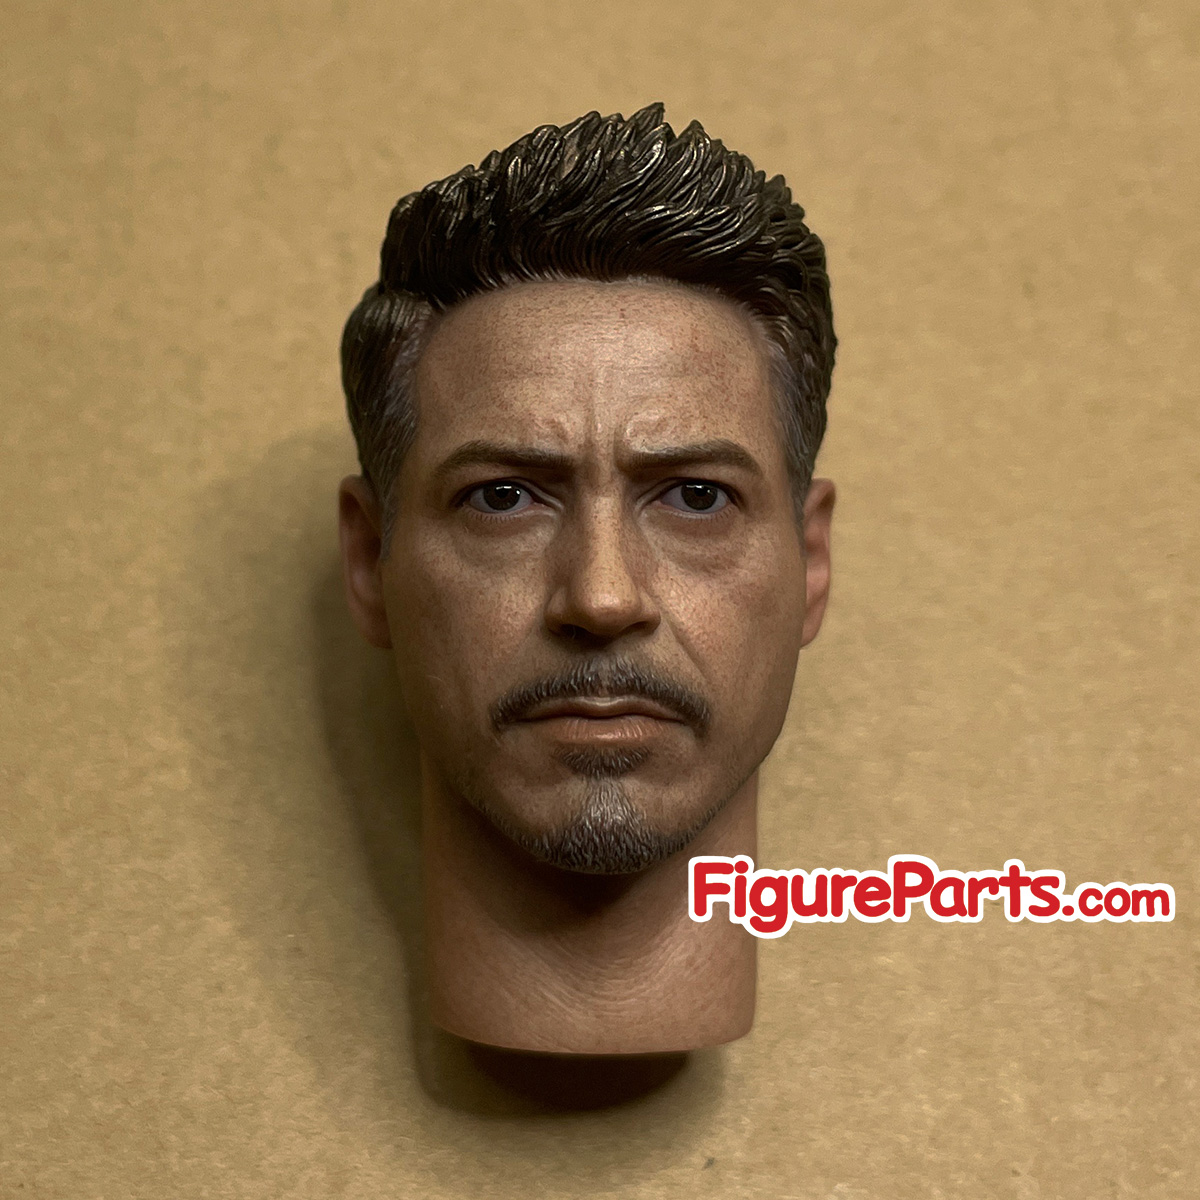 Head Sculpt - Tony Stark Team Suit - Avengers Endgame - Hot Toys mms537